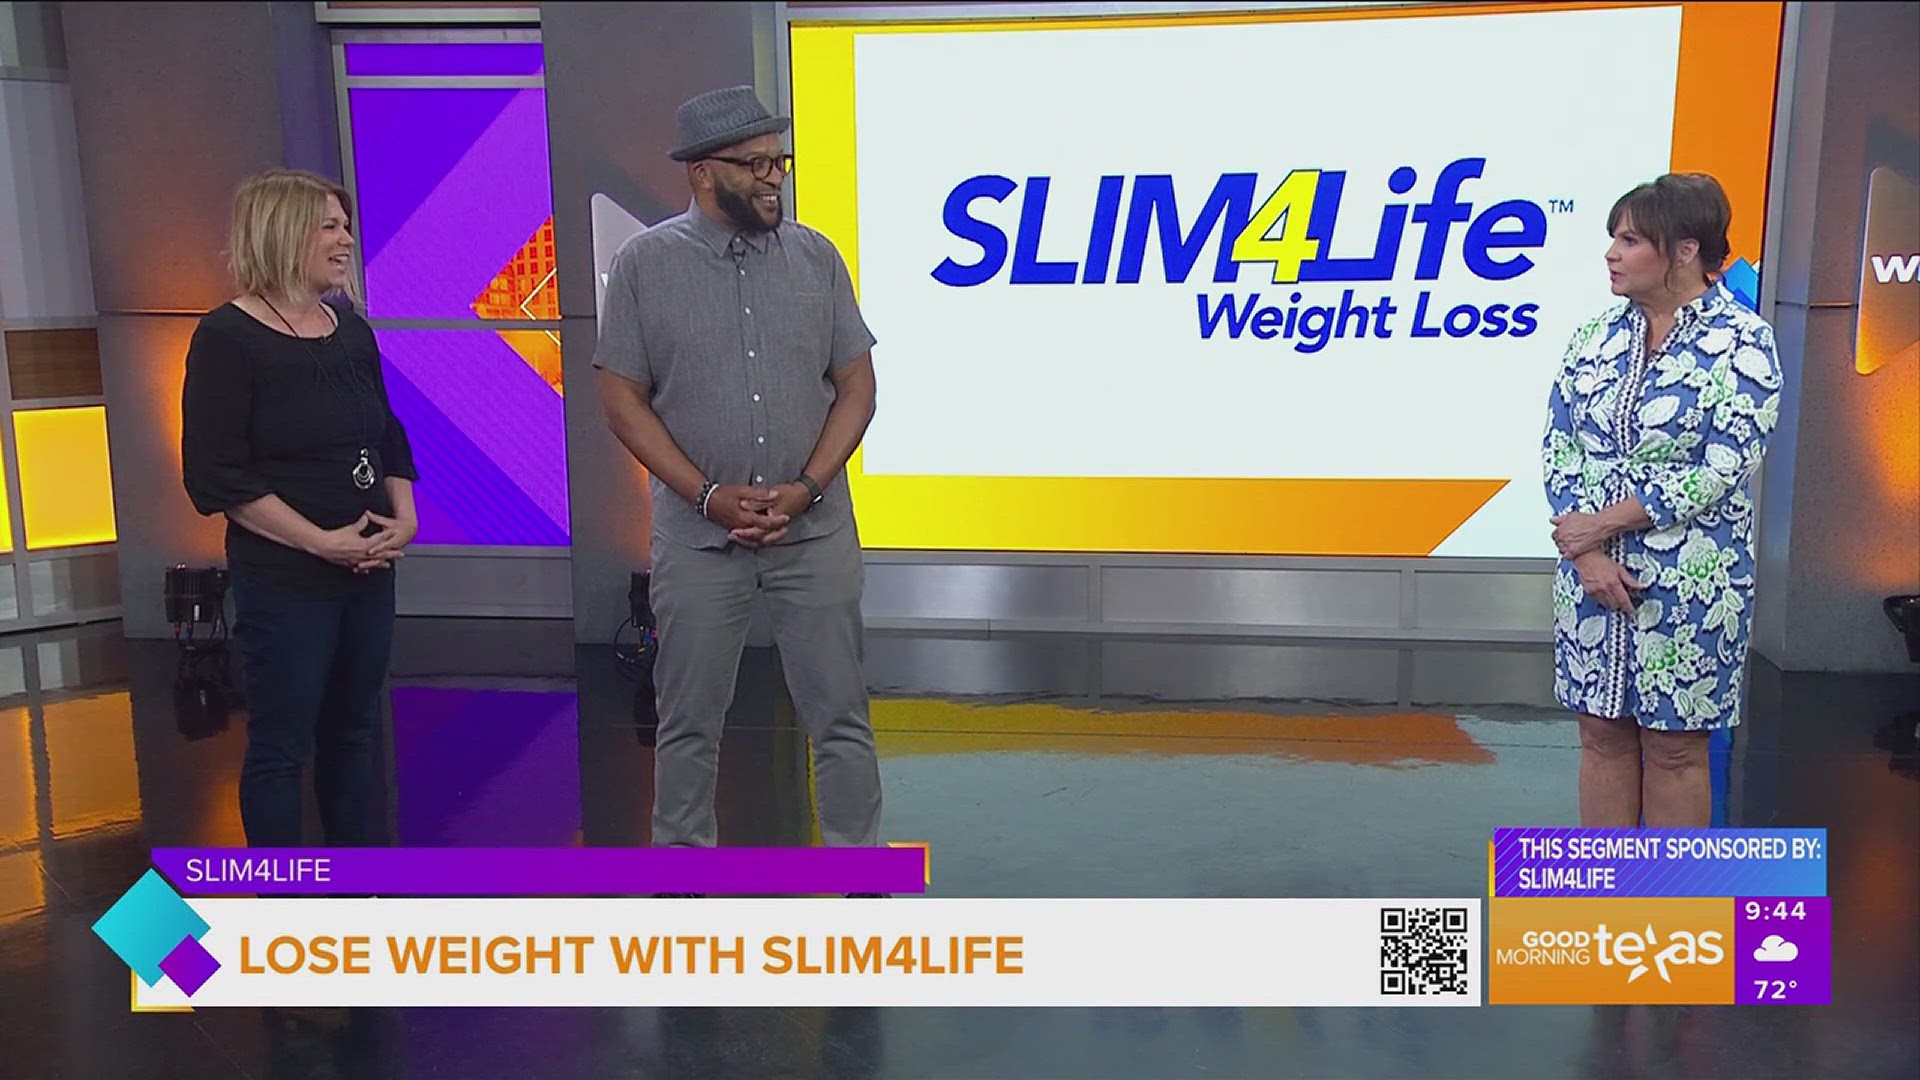 This segment is sponsored by: Slim4Life